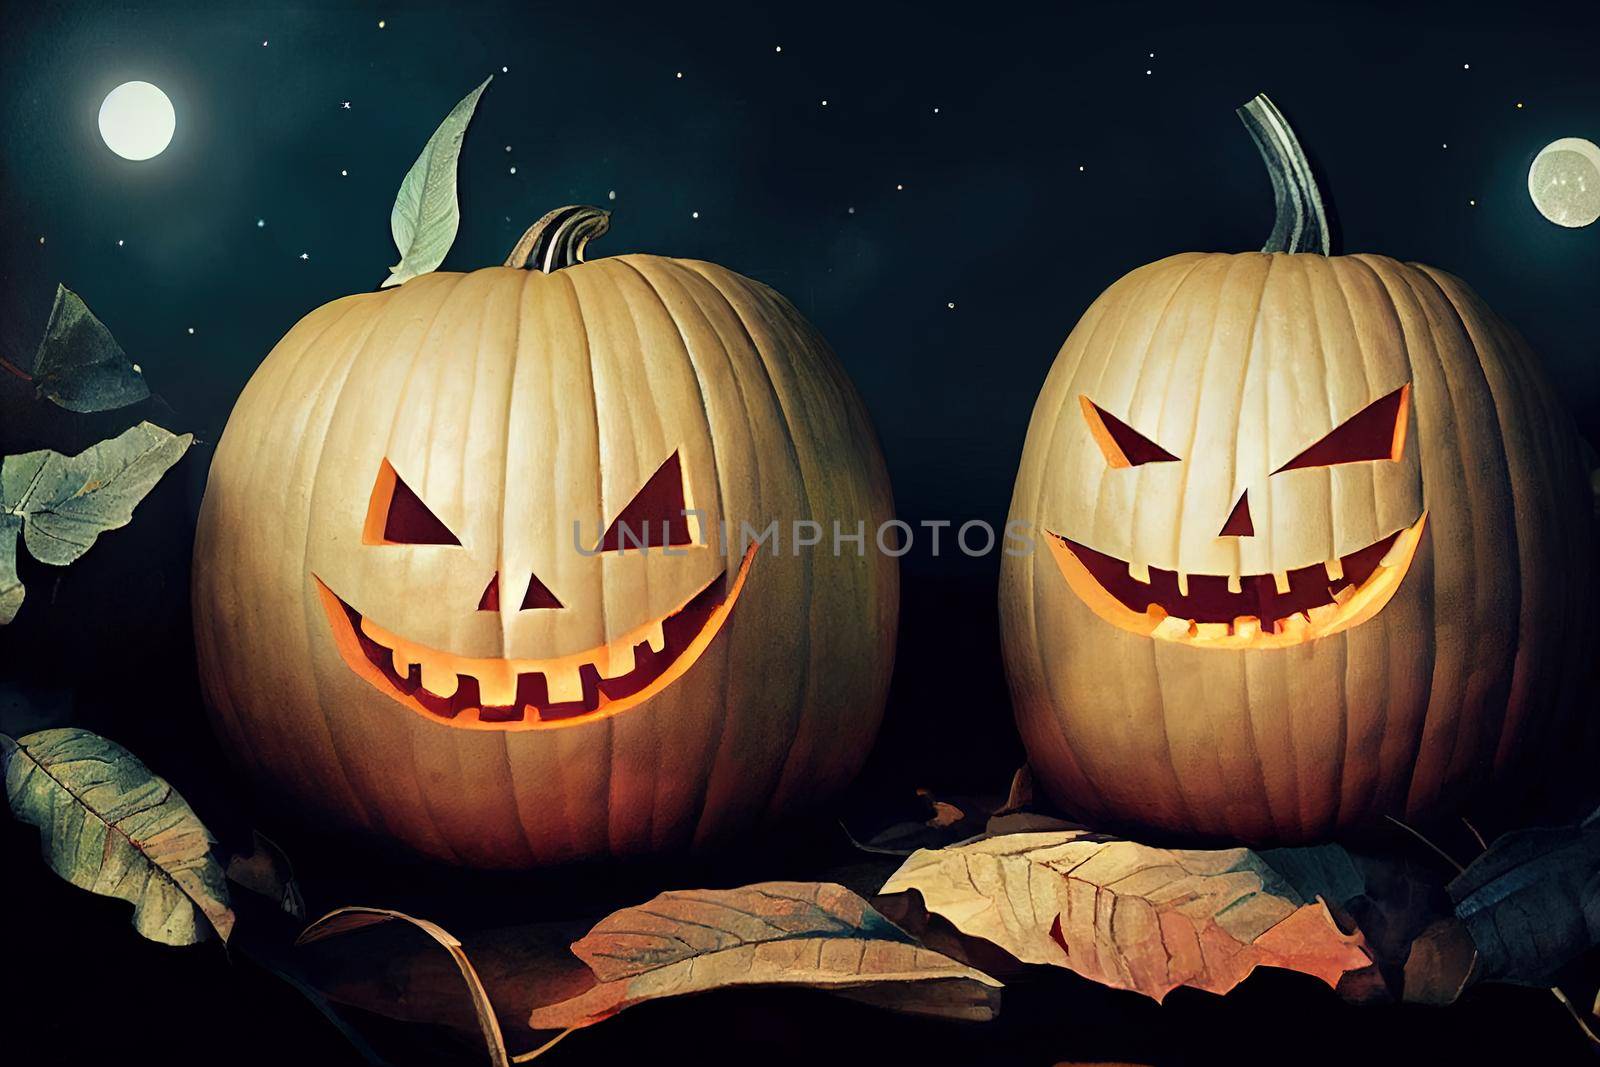 pumpkins smiling in dark night. High quality illustration